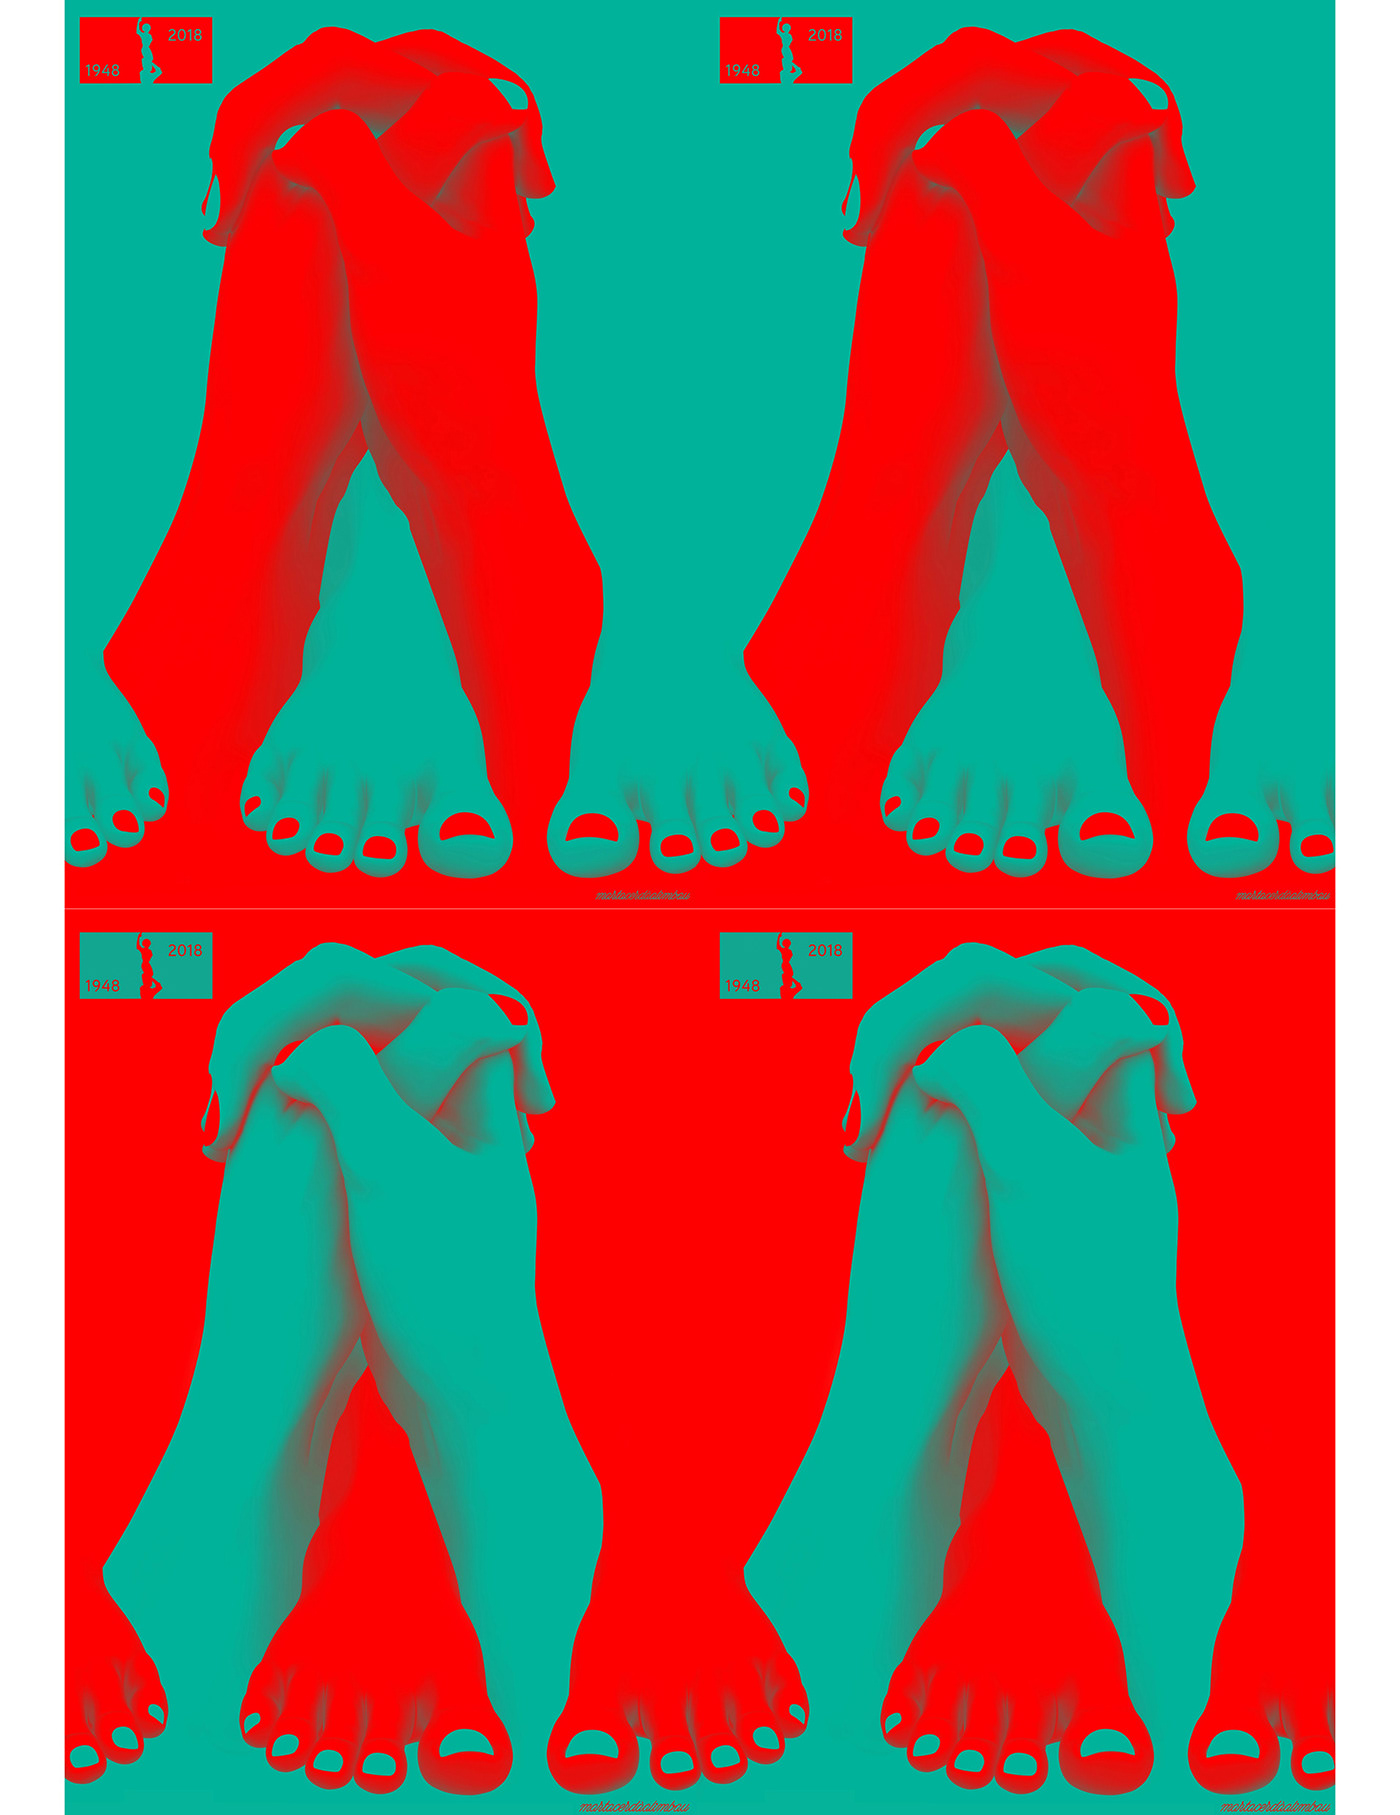 castellers human towers op art Visual Paradox optical illusion Oxymoron feet foot hands faith